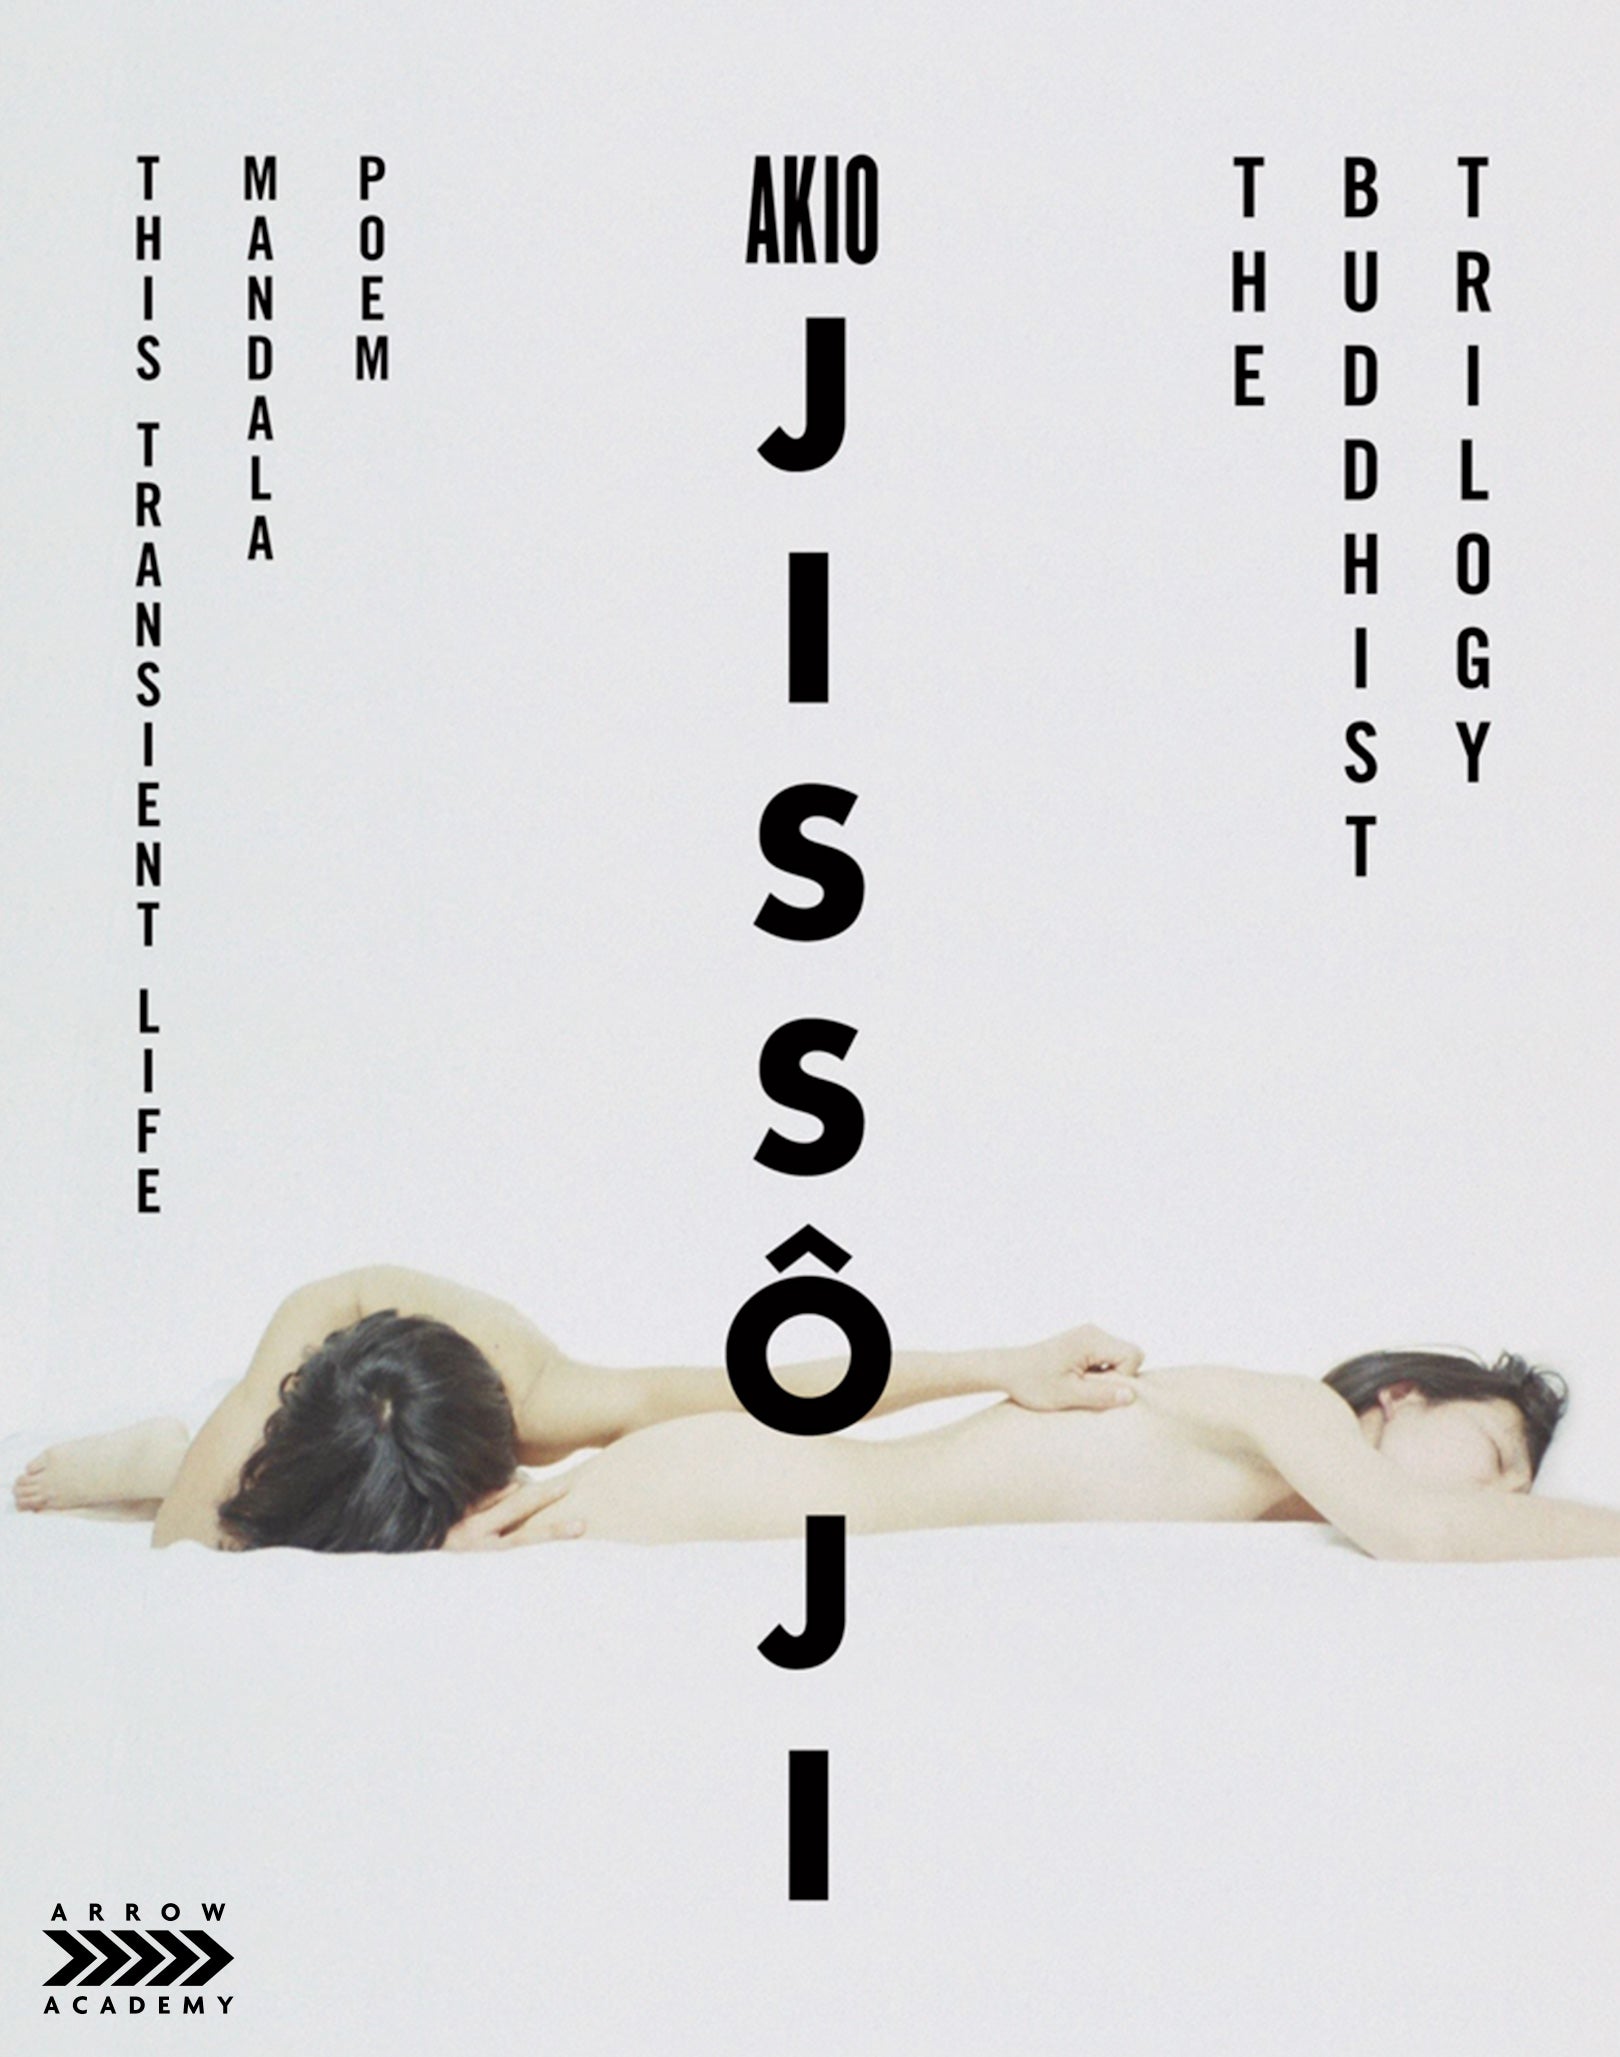 Akio Jissoji: The Buddhist Trilogy (Limited Edition) Blu-Ray Blu-Ray